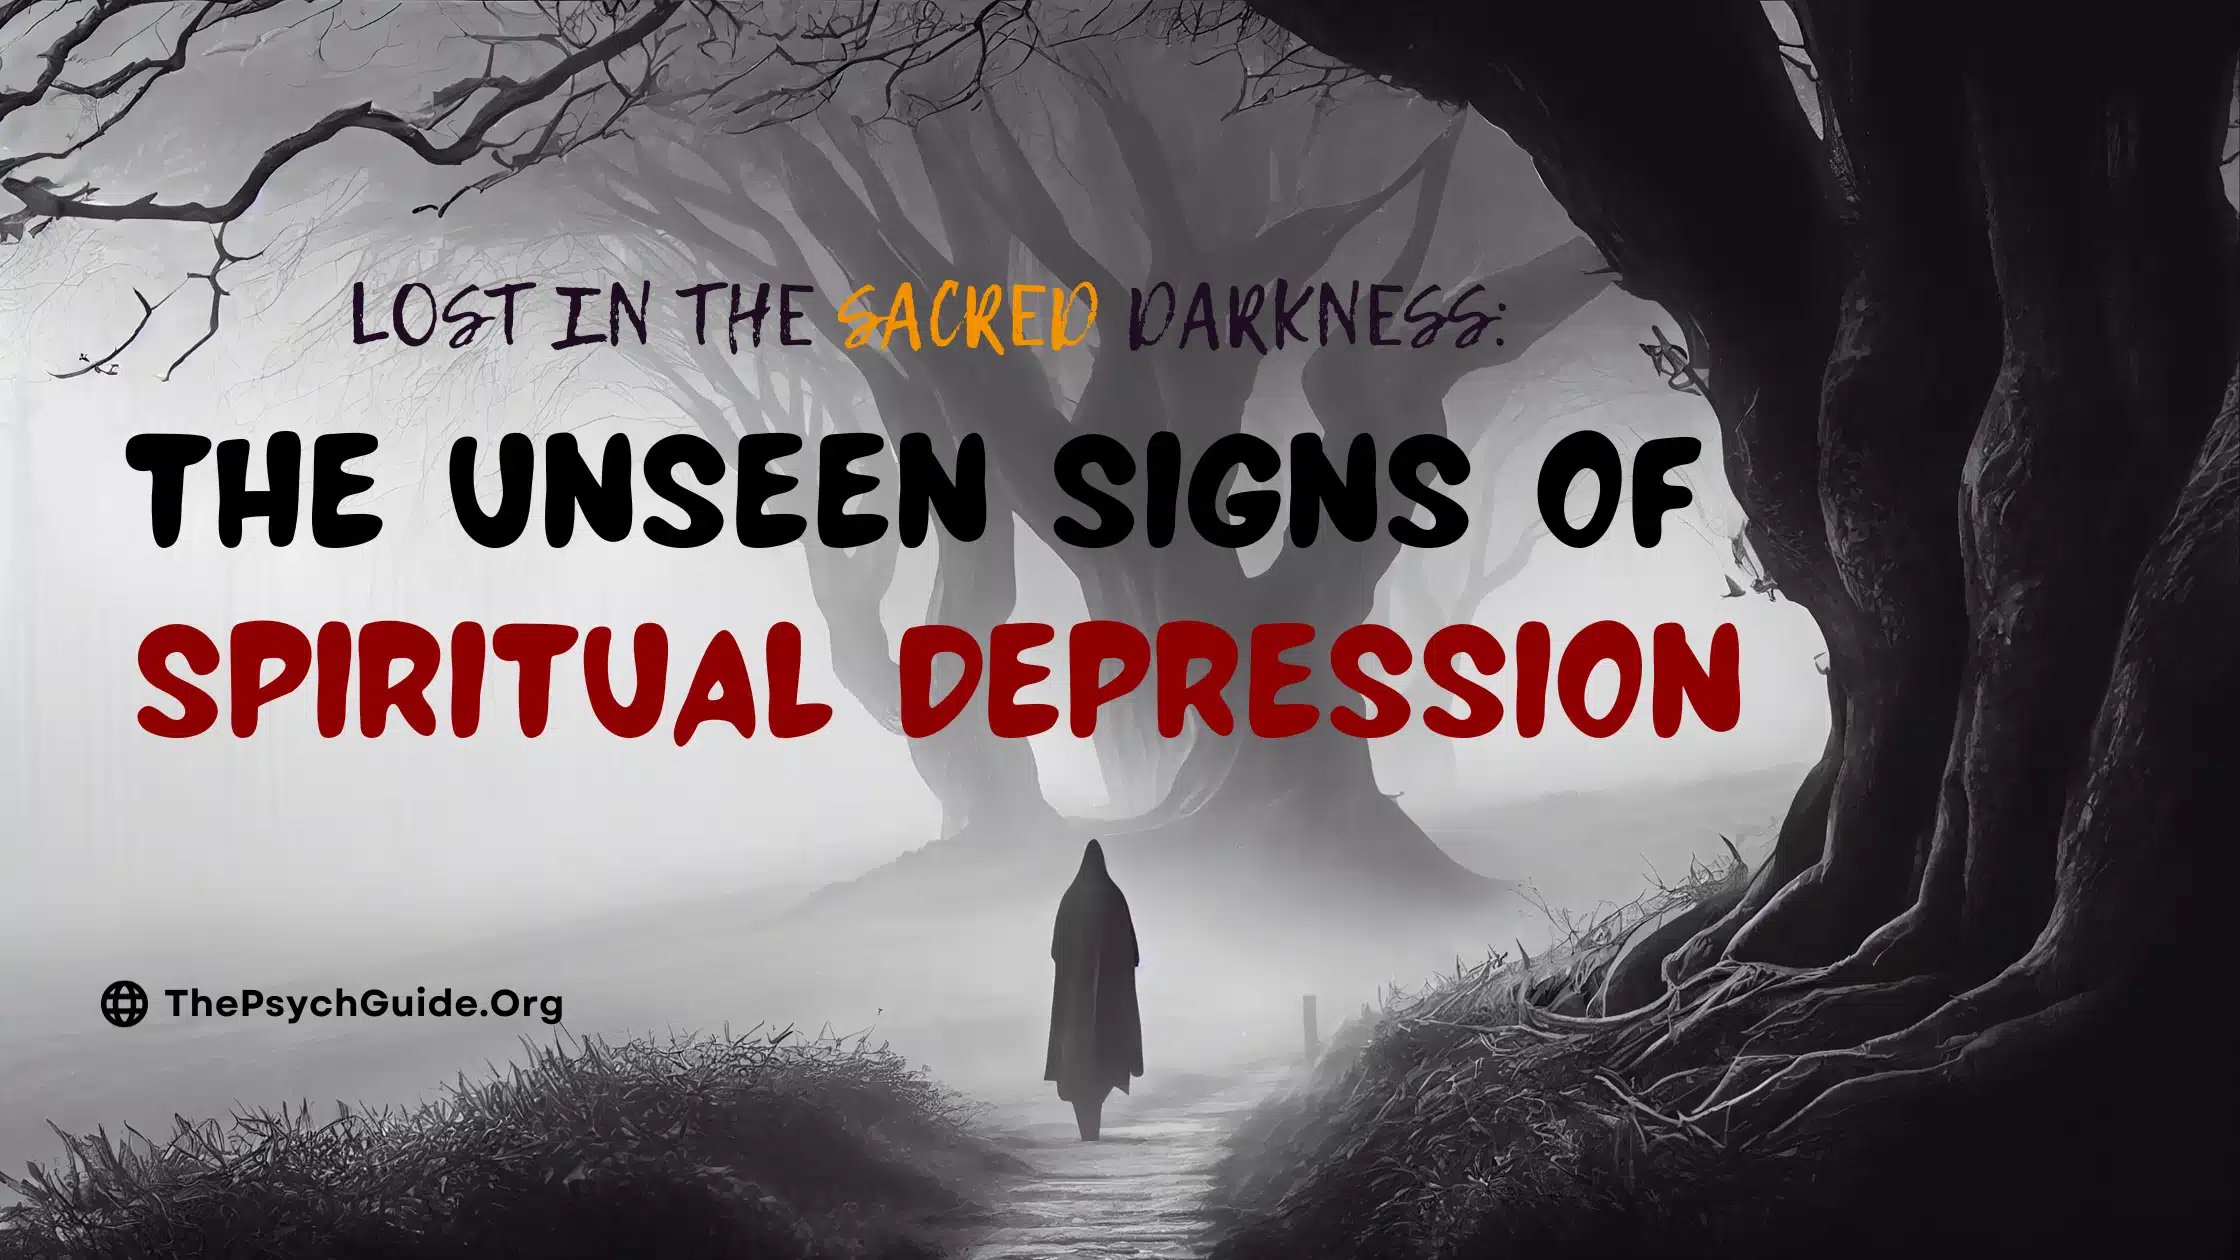 Spiritual depression symptoms